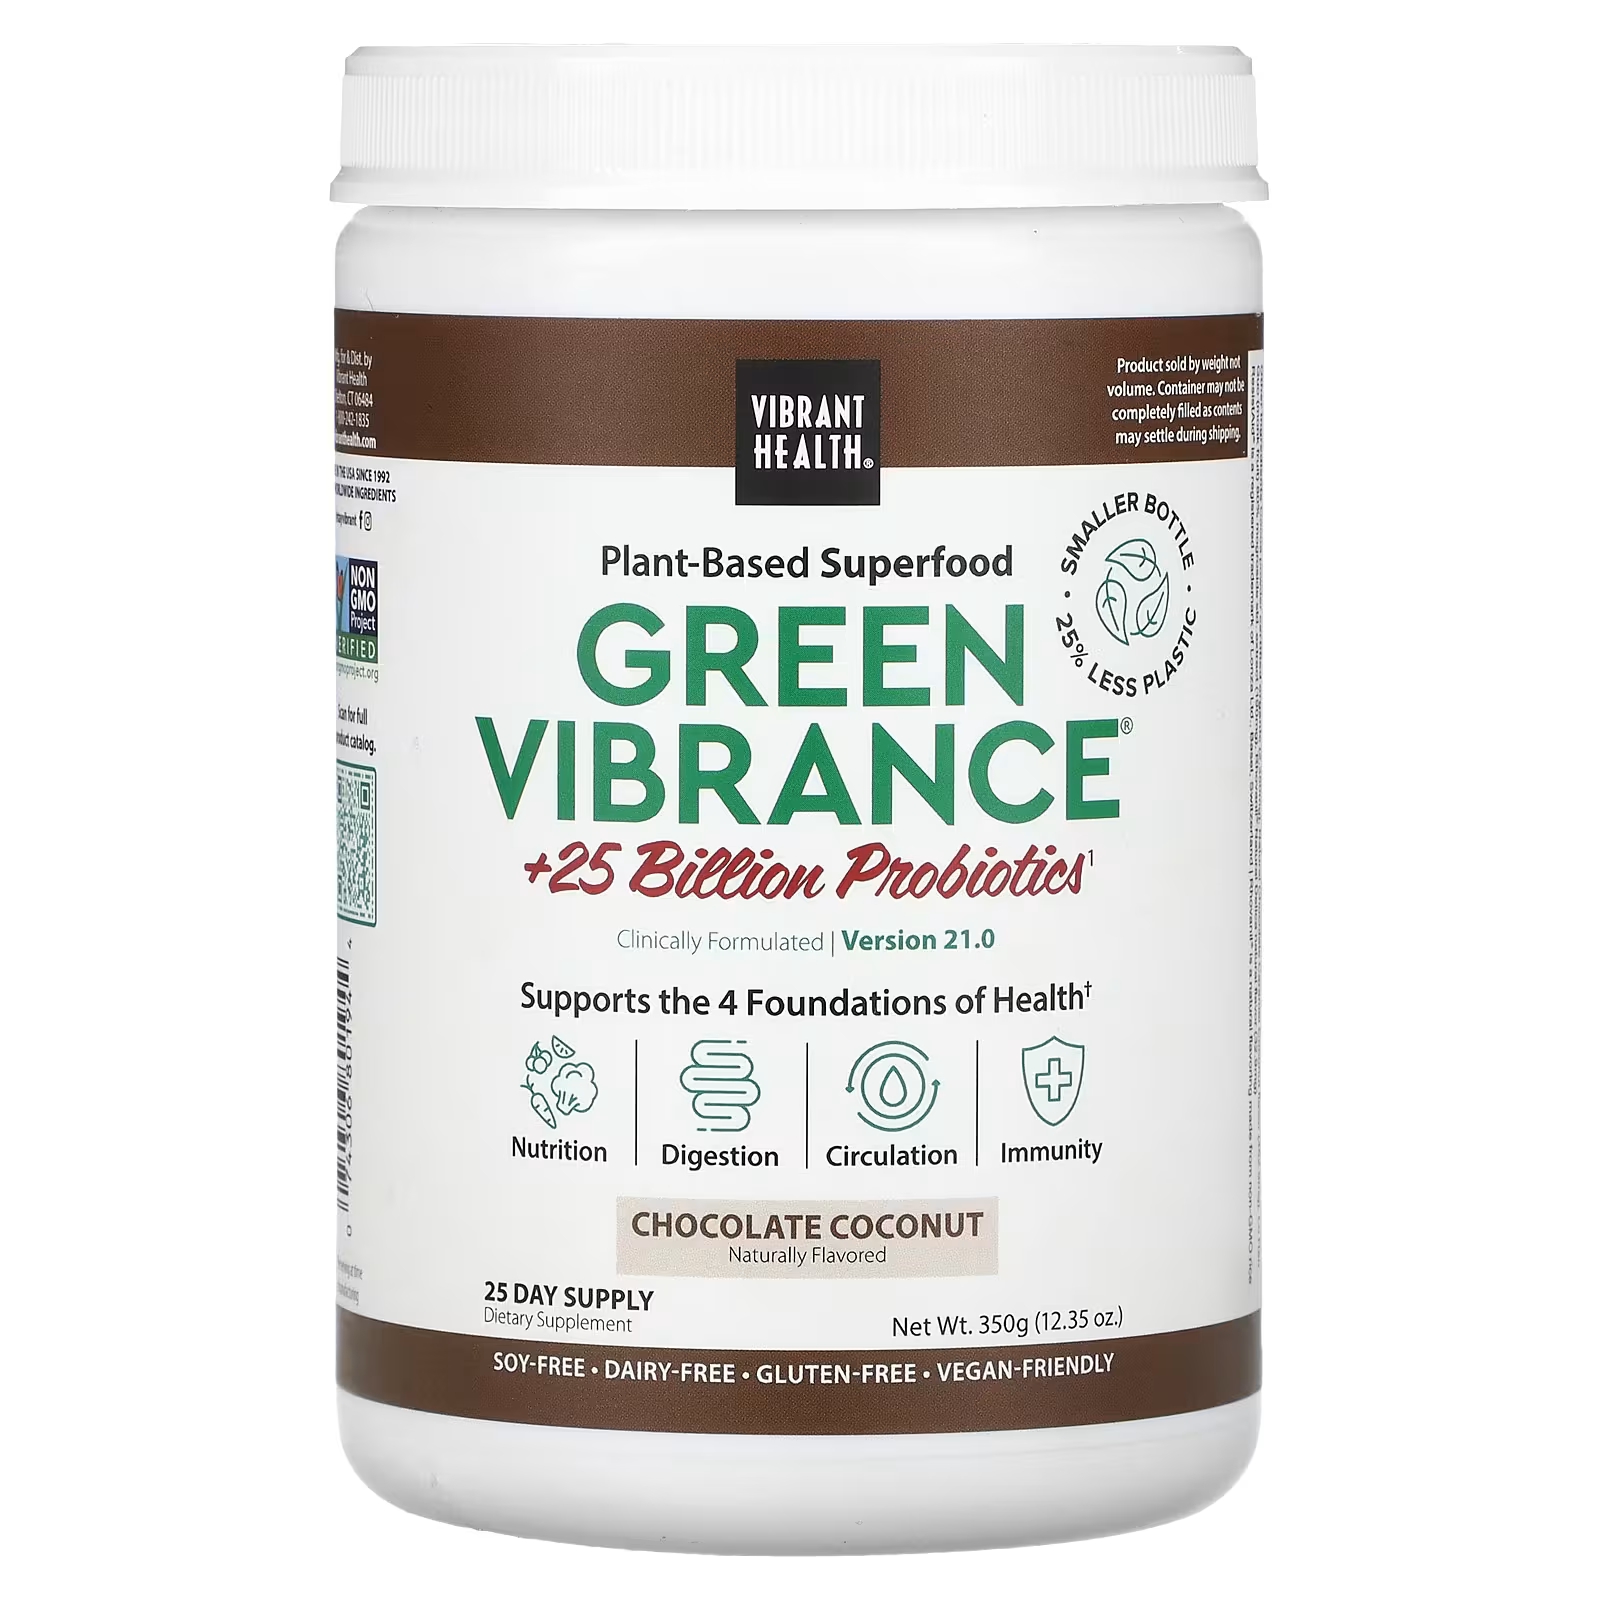 Пищевая добавка Vibrant Health Green Vibrance +25 миллиардов пробиотиков, 350 г vibrant health green vibrance 25 млрд пробиотиков версия 17 0 35 27 унц 1 кг